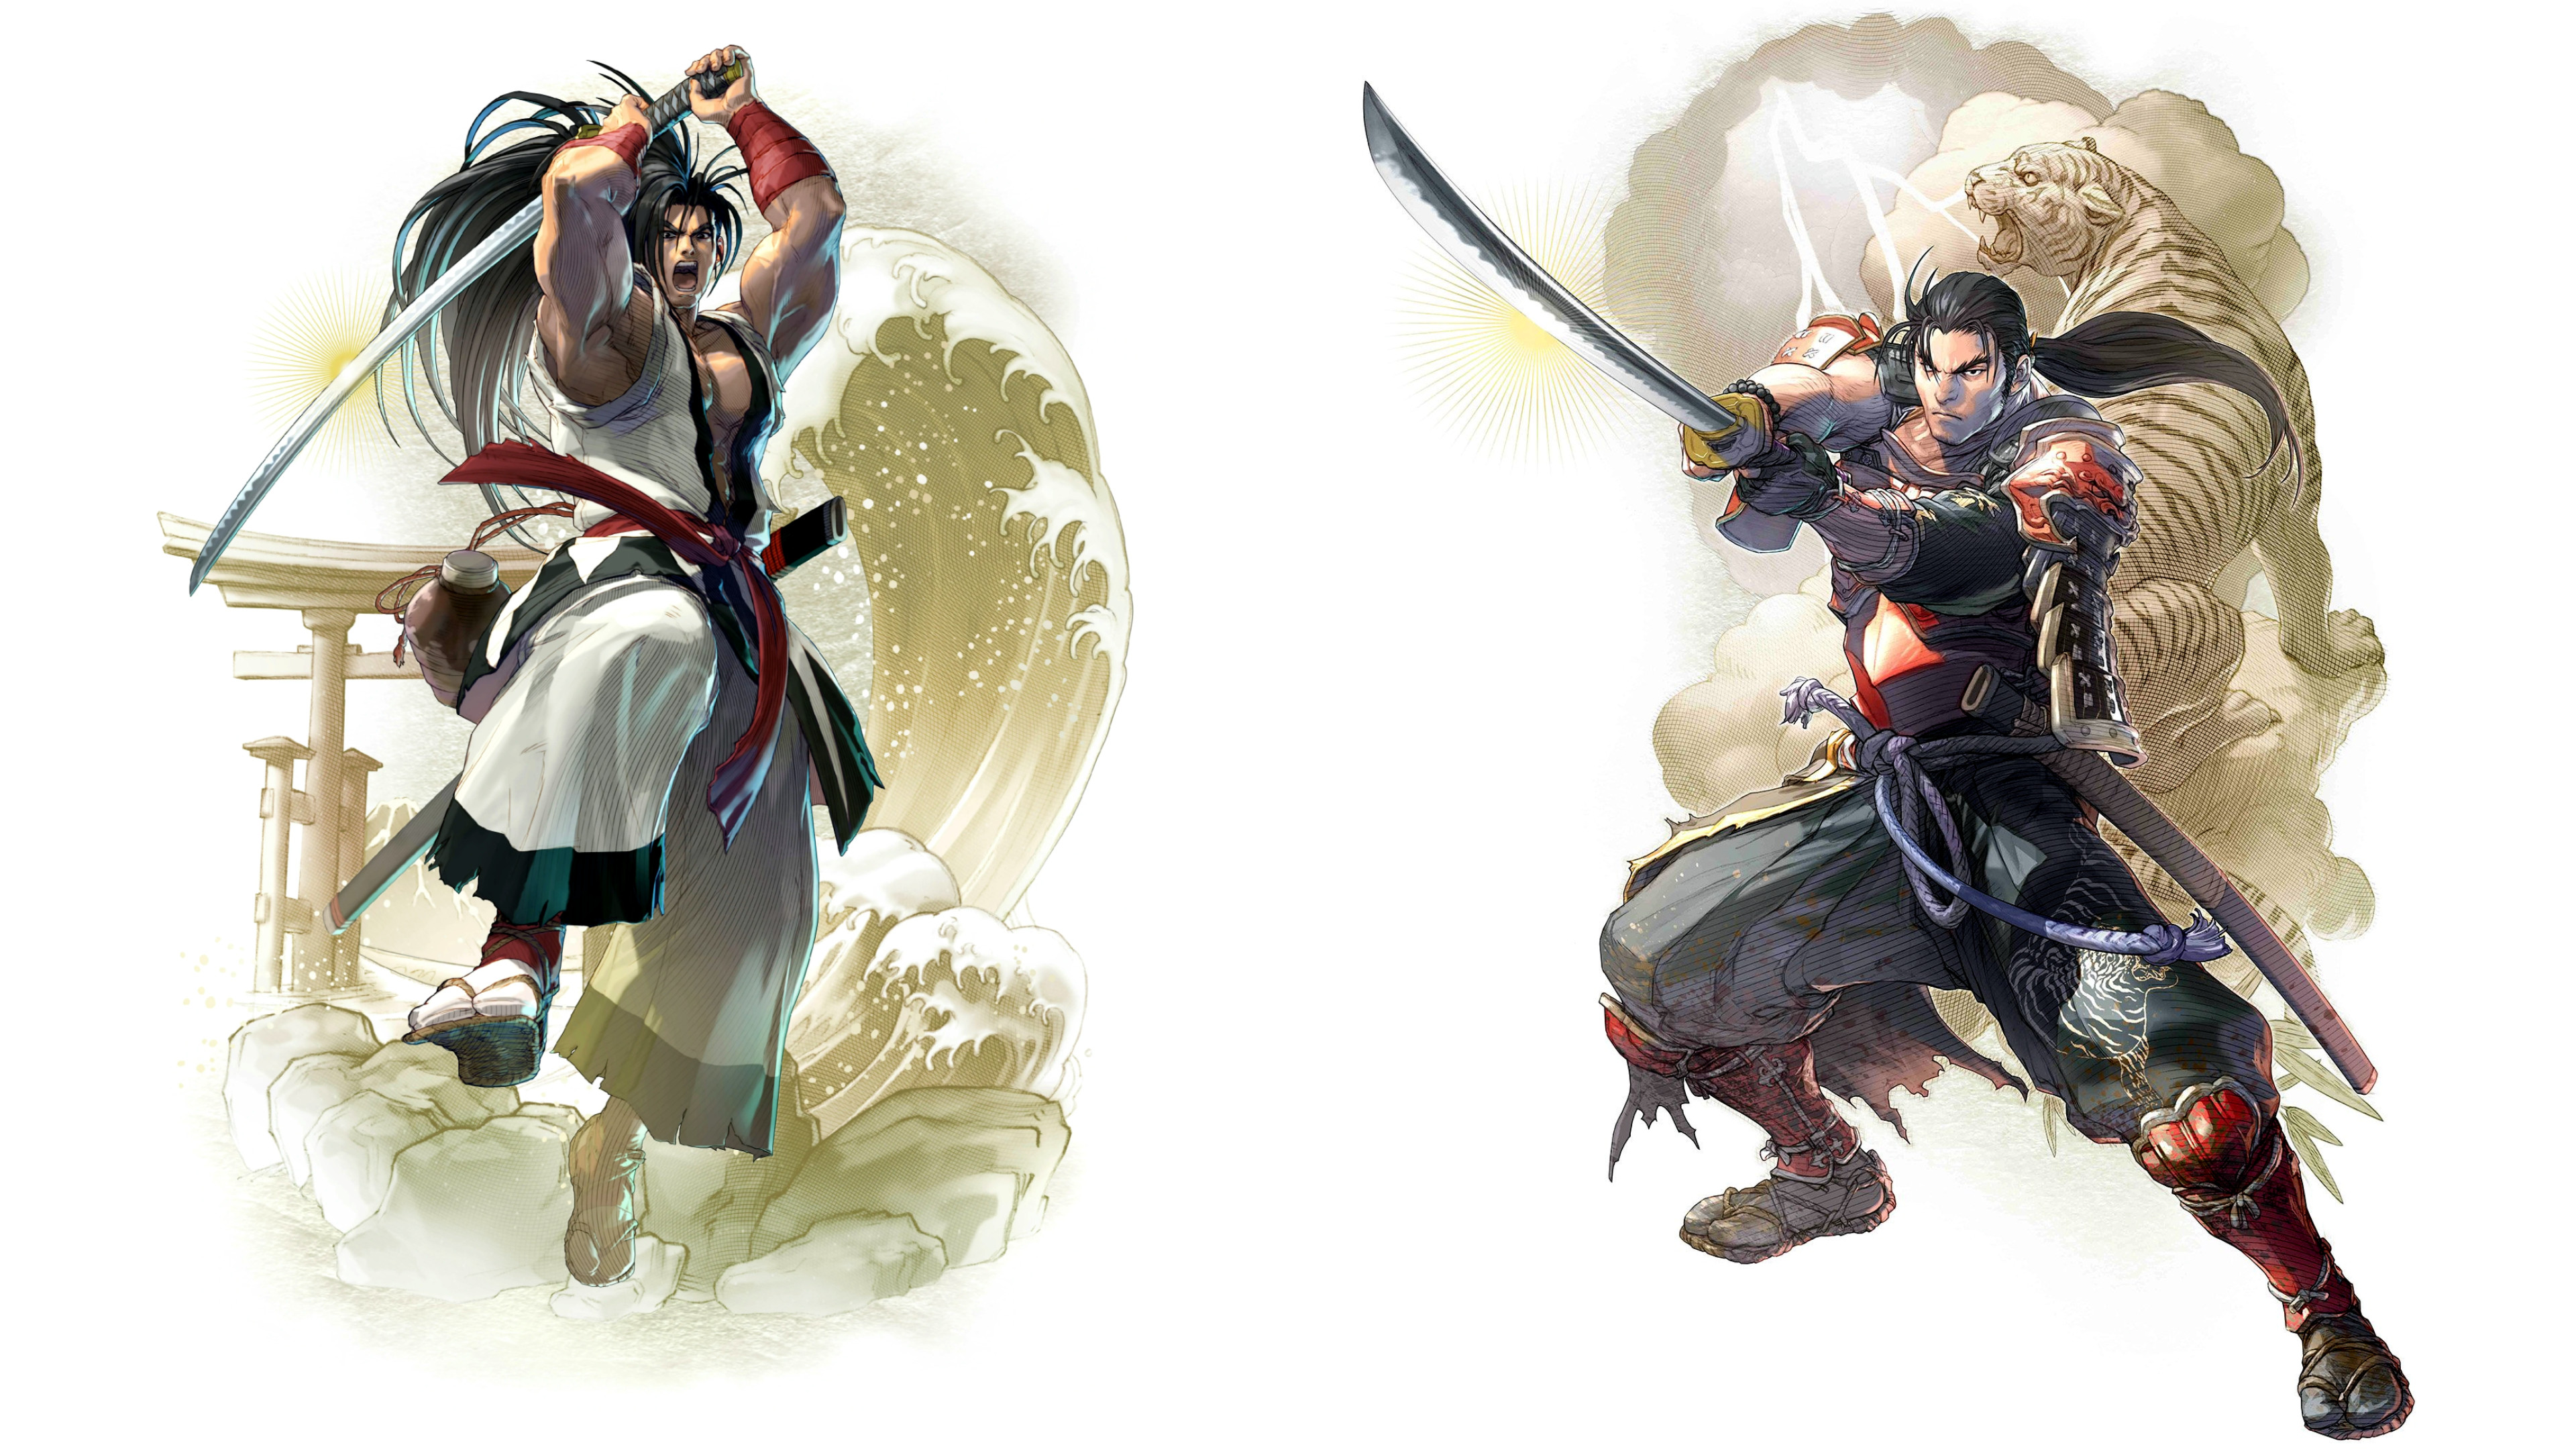 Soul Edge VS Samurai Spirits